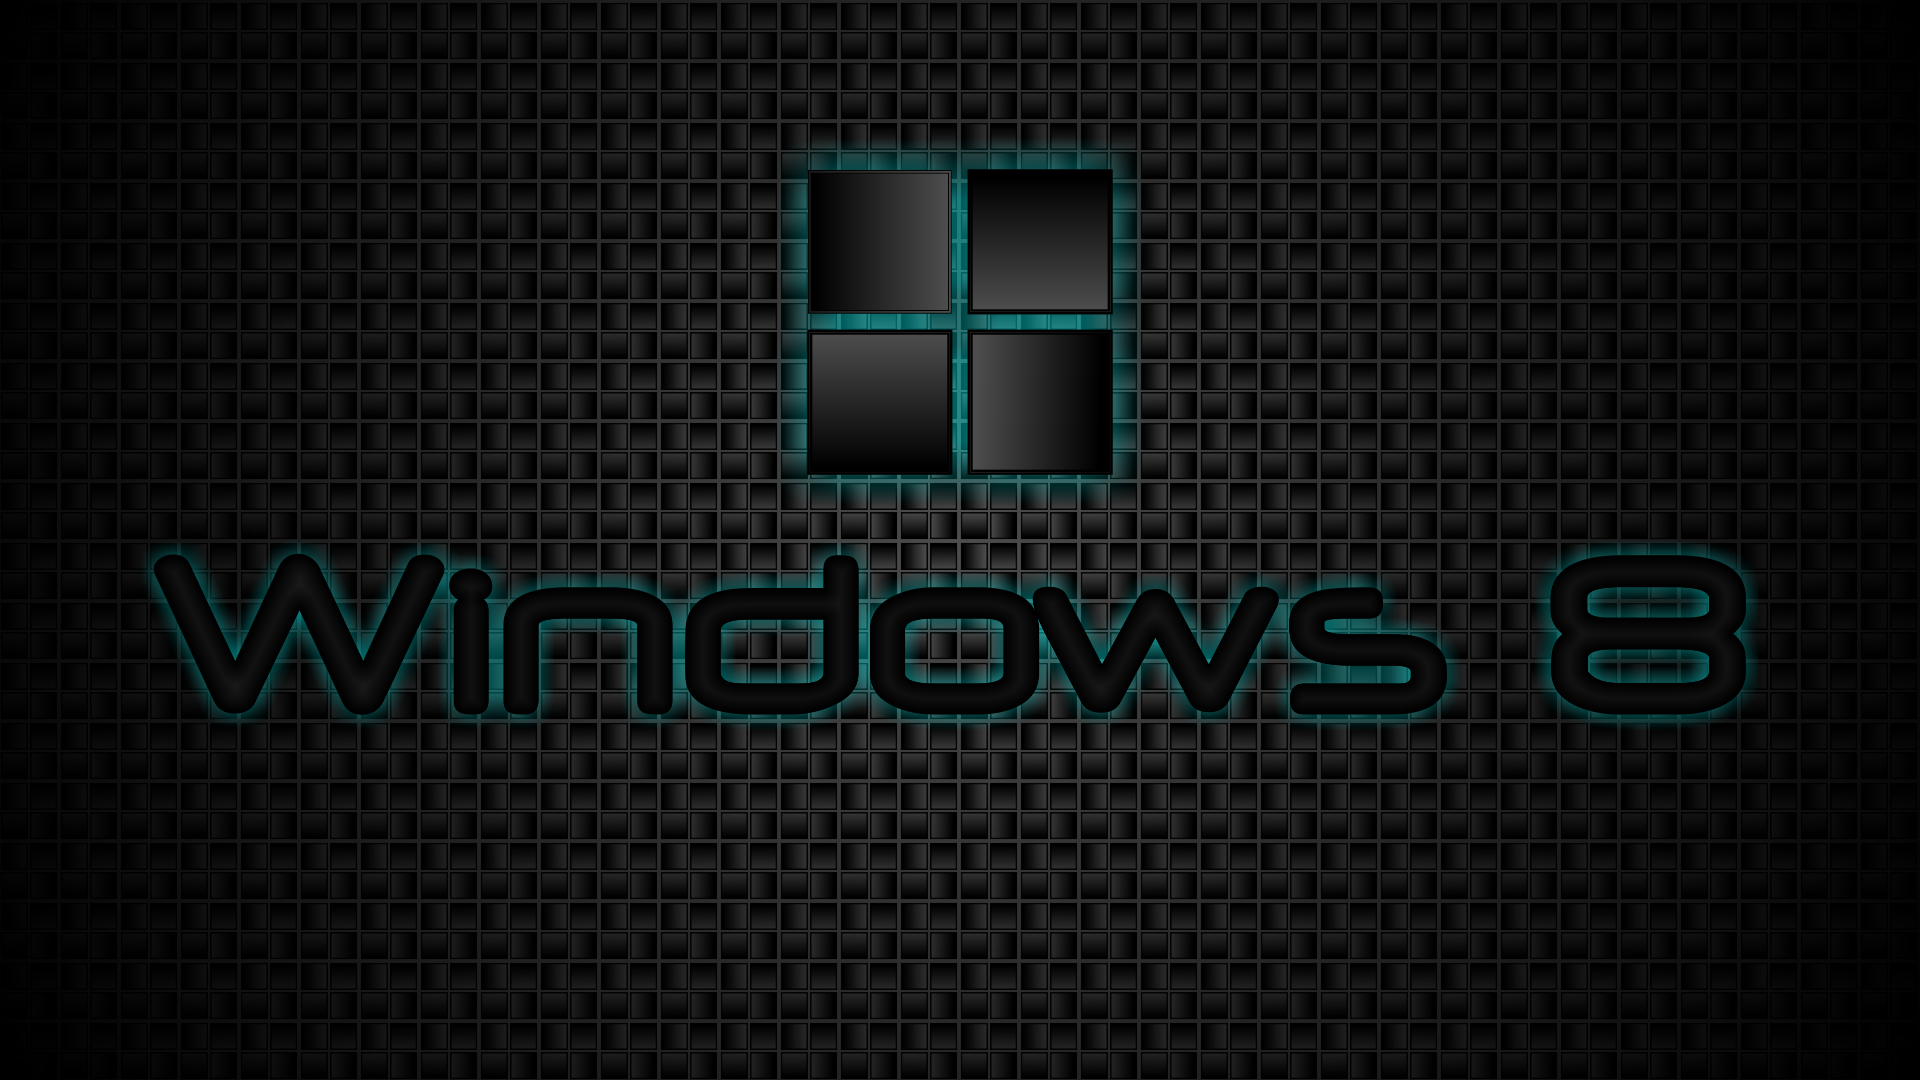 Windows 8 Backgrounds Wallpaper HD Free Download | New HD ...